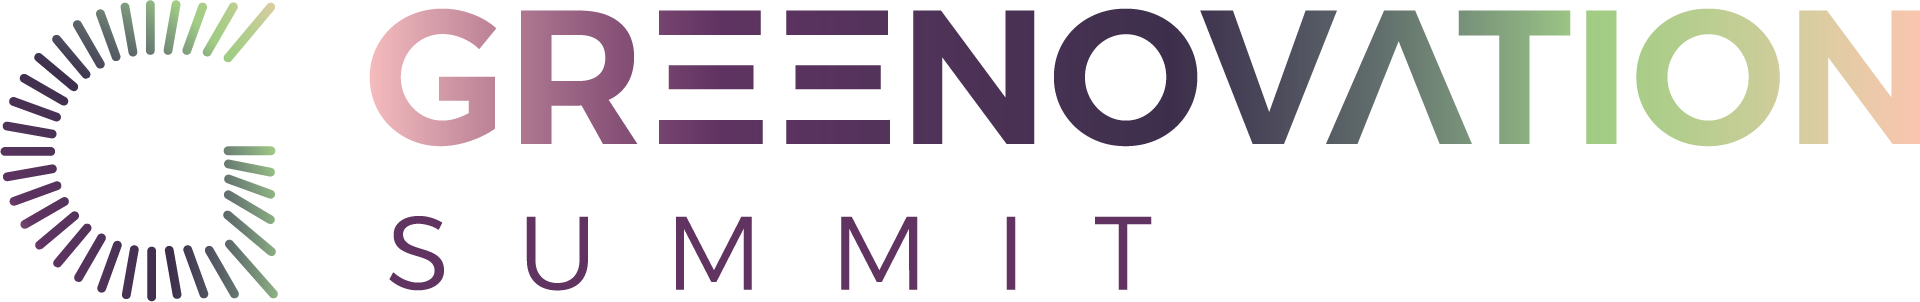 greenovation summit logo